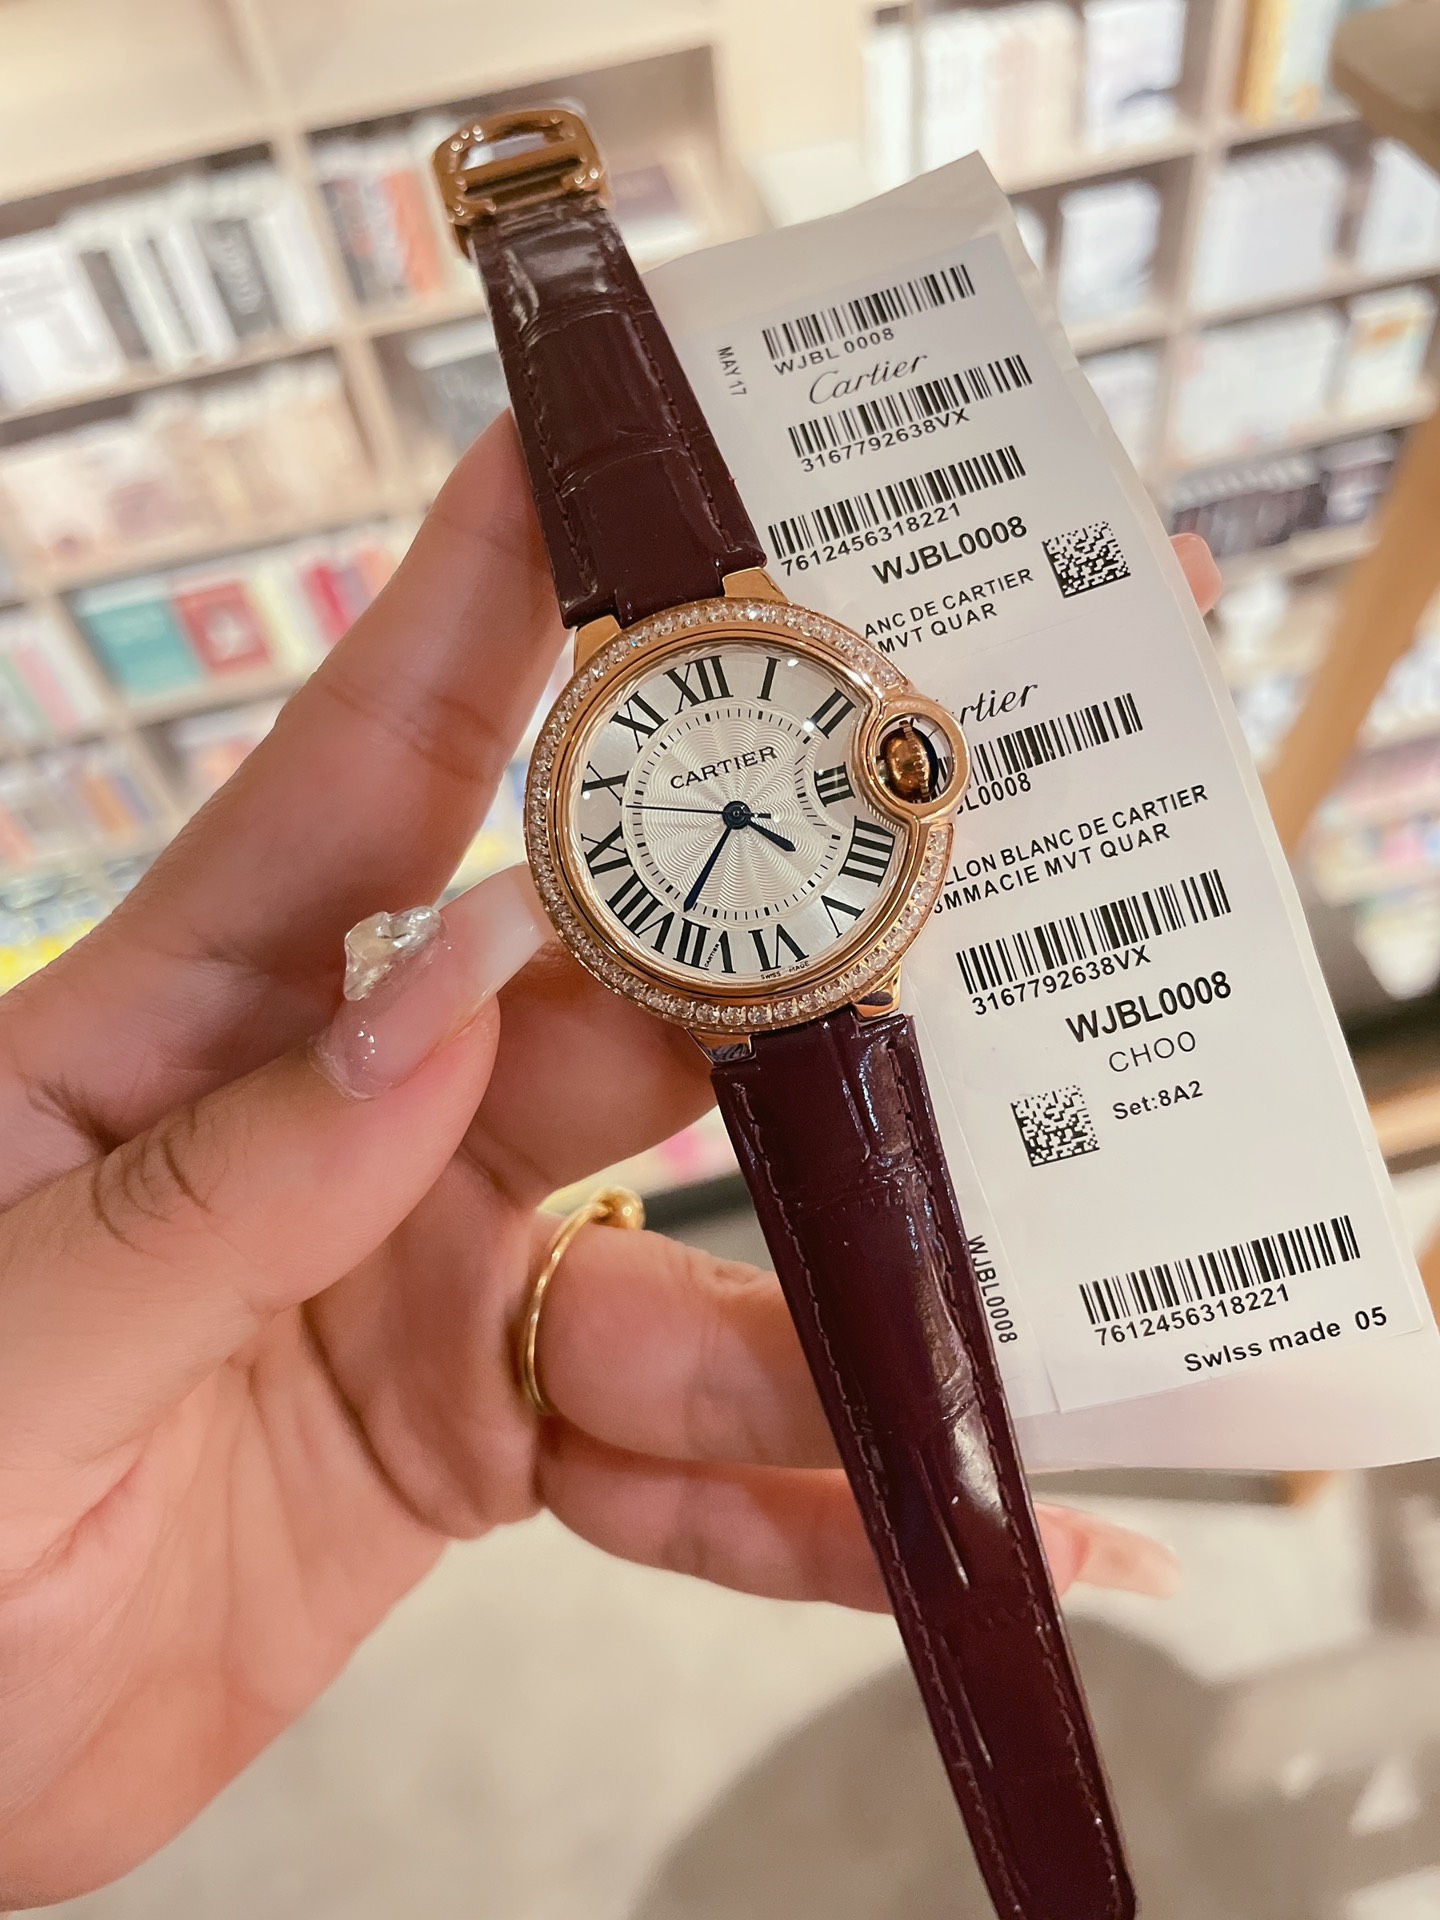 CARTIERカルティエ マレーシアｎ級品 フランス 薄い腕時計 丸い形 レザー 新商品 限定品 レッド_3